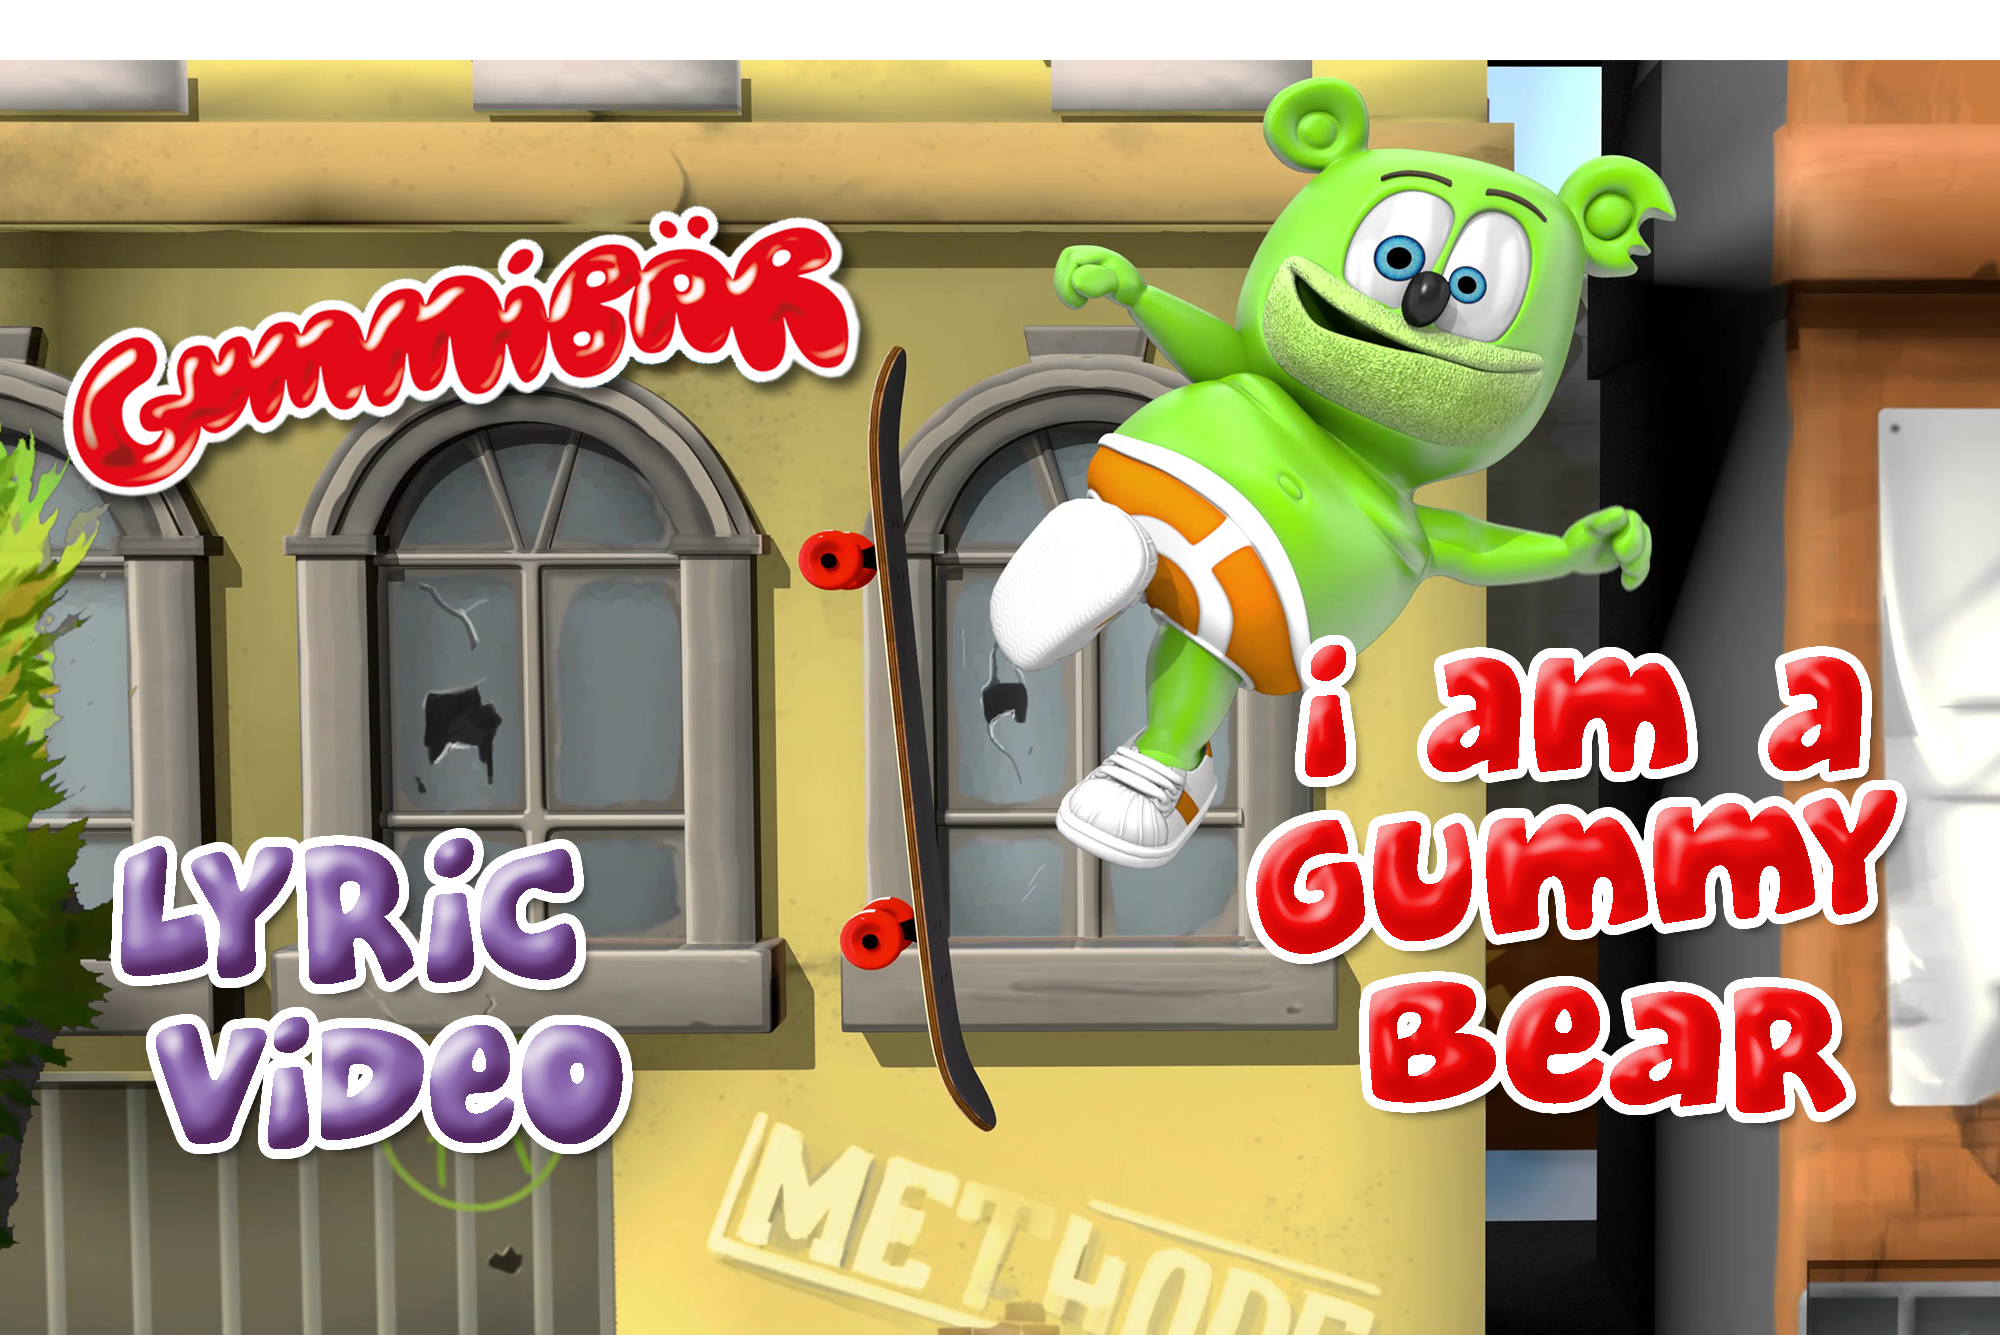 I Am A Gummy Bear (The Gummy Bear Song) Lyrics - CDM Project - Only on  JioSaavn